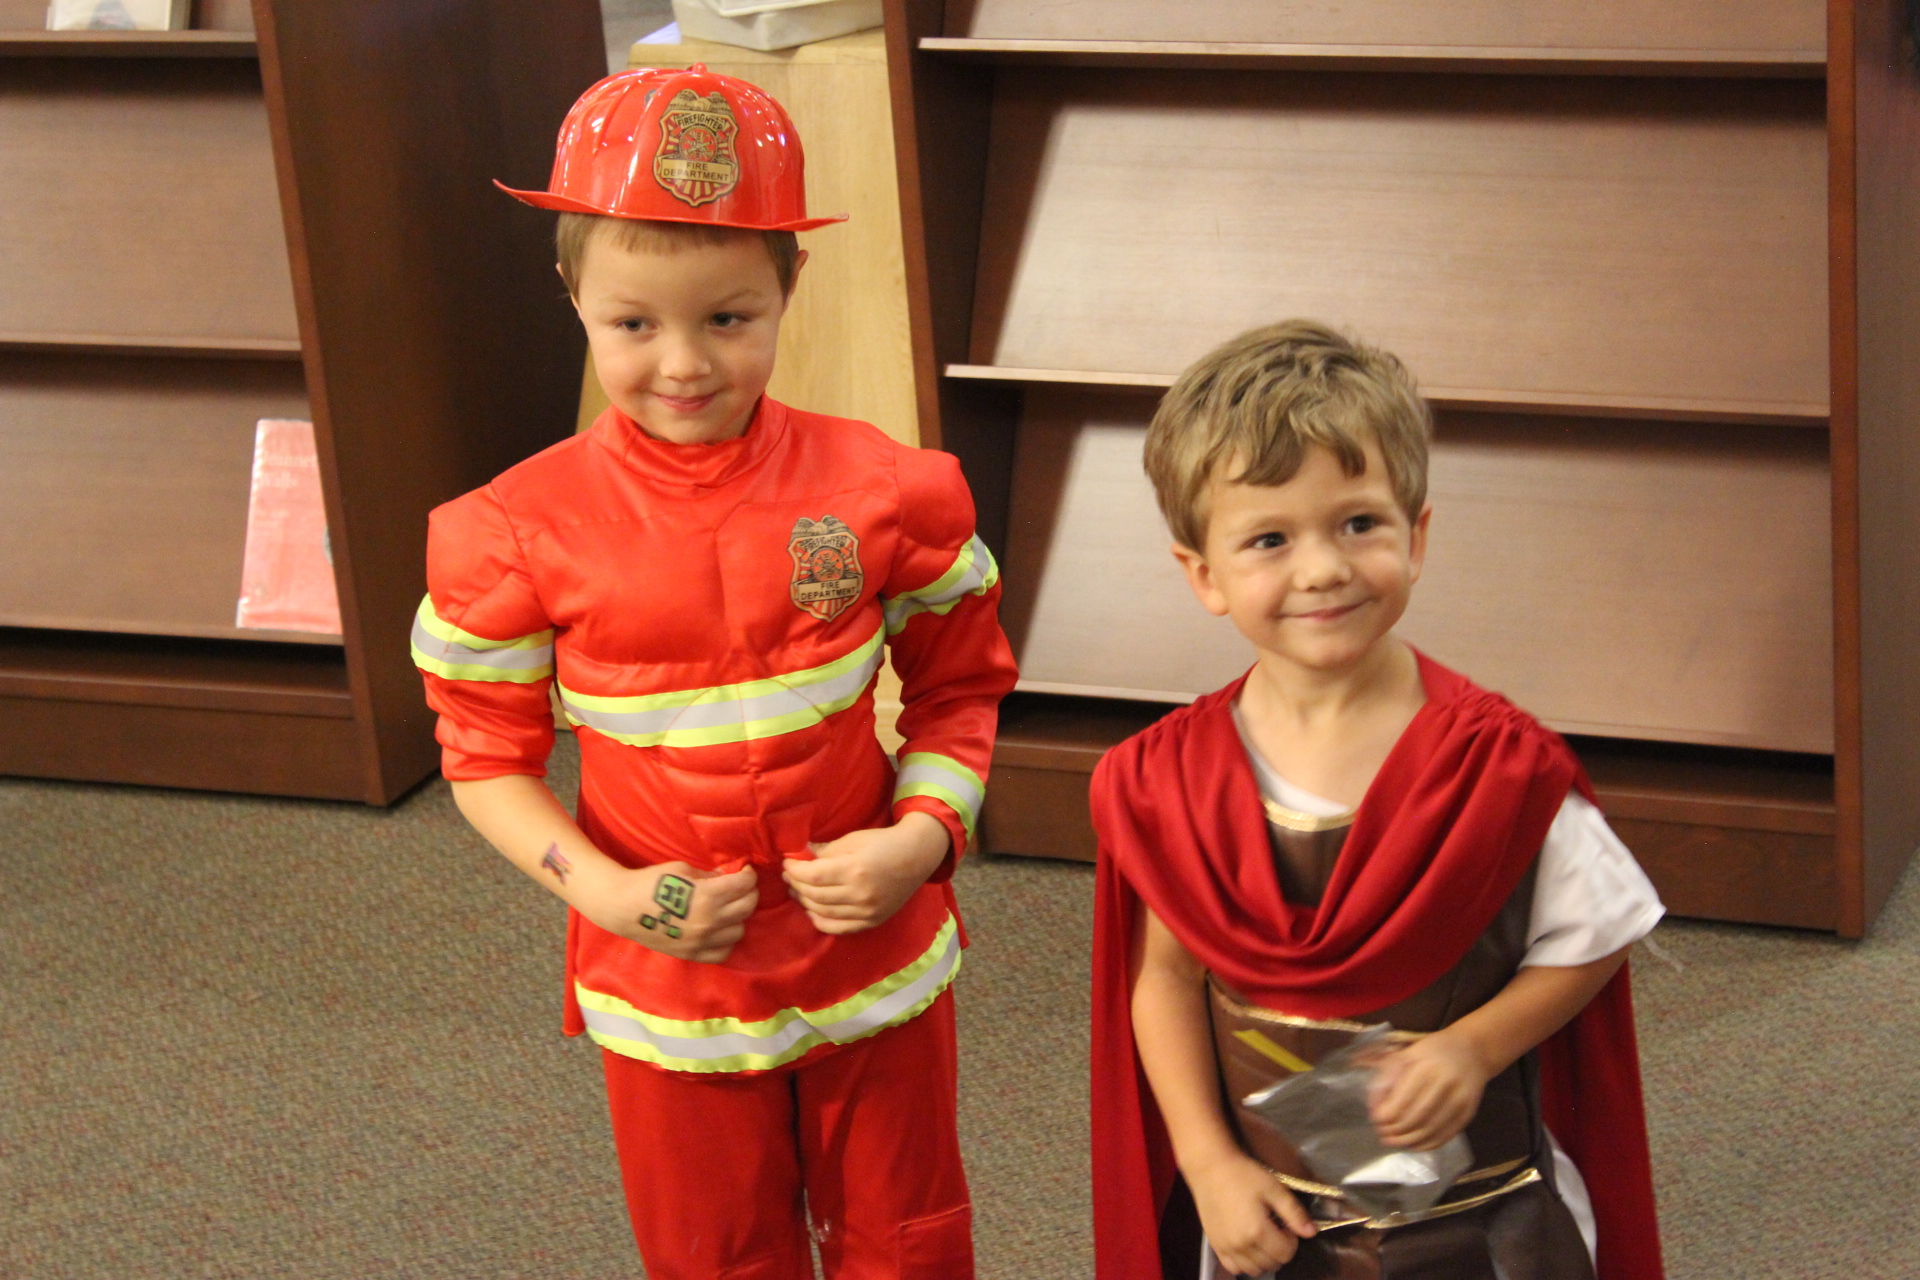 Children dressed as fireman and Roman legionnaire